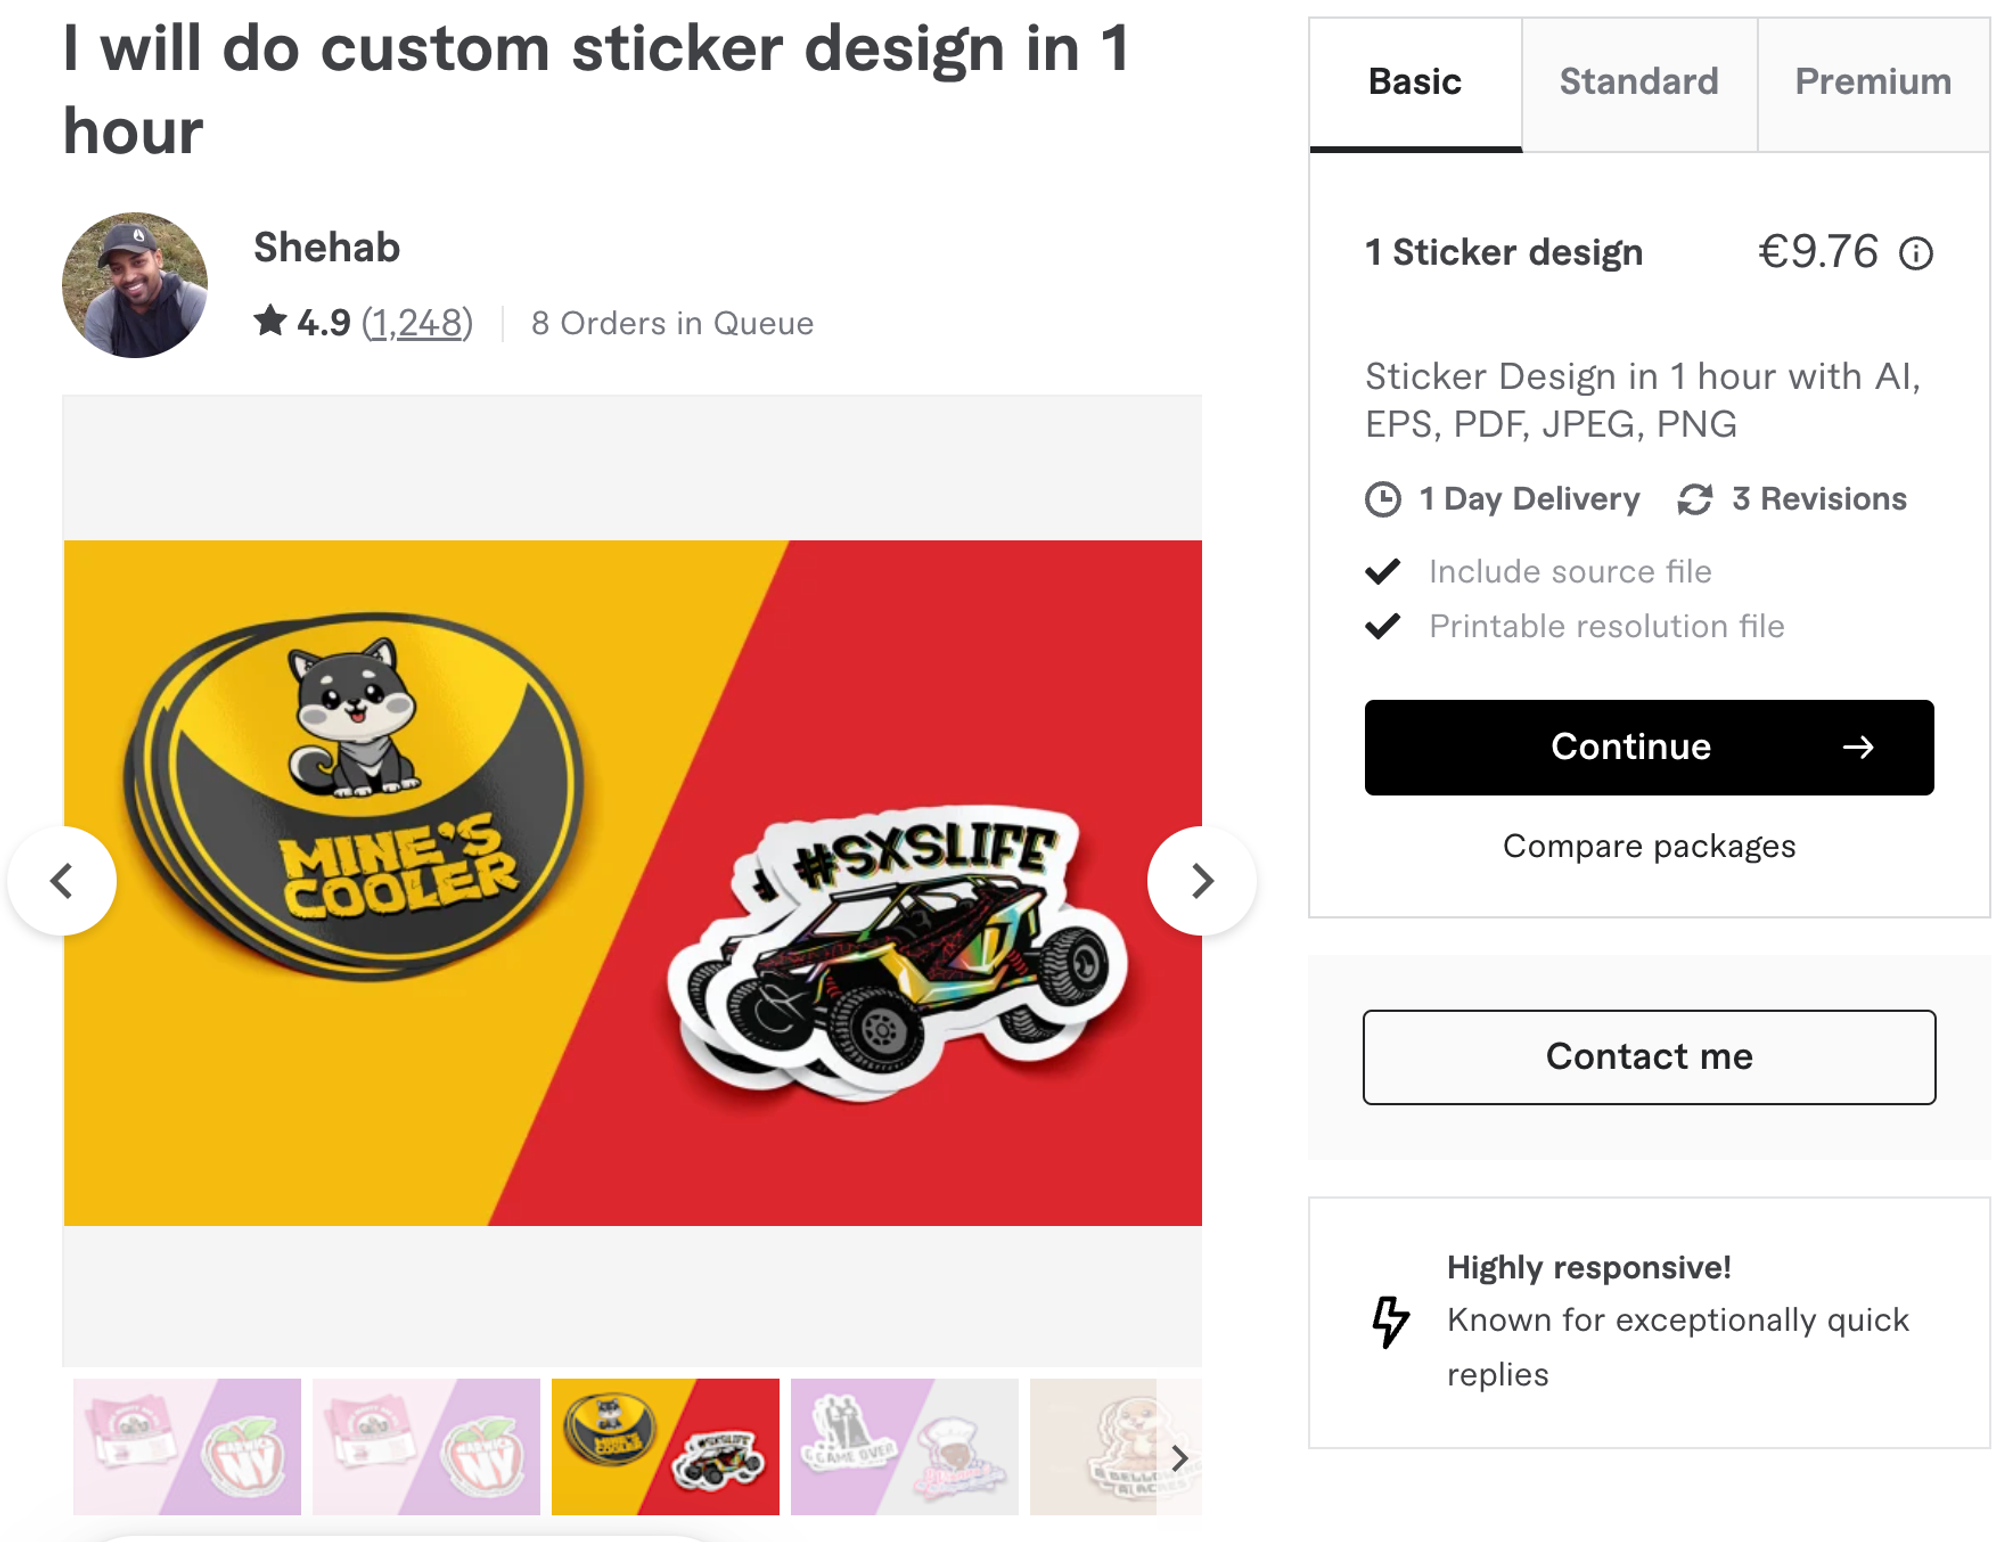 Shehab will create custom stickers very cheaply